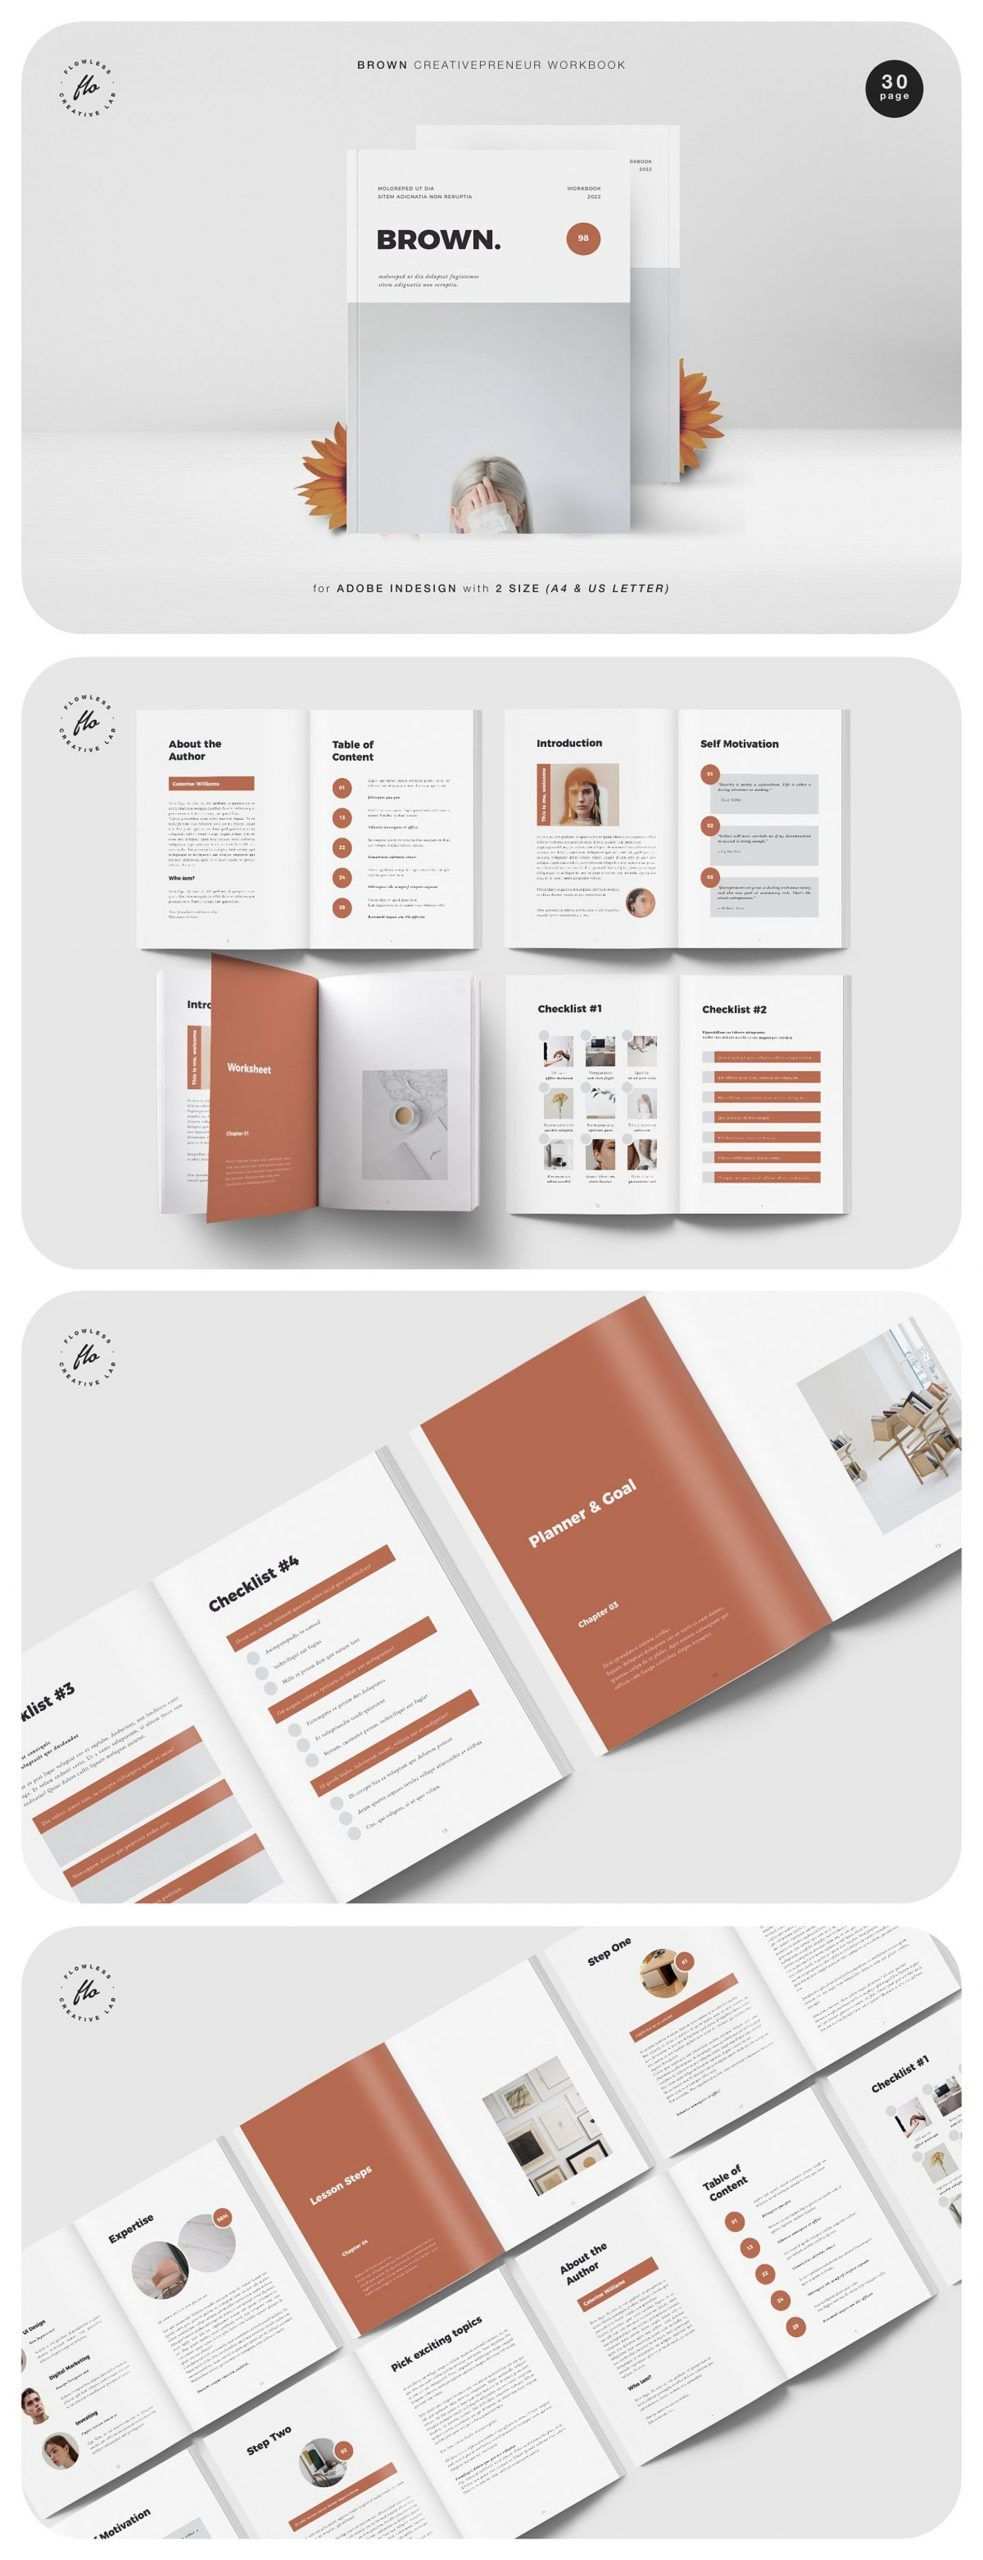 Grafikdesign Minimalistischer Katalog Lookbook Vorlagen Broschuren Design Vorlagen Magazin Layouts En 2020 Brochure Creativos Agencia De Publicidad Diseno Editorial